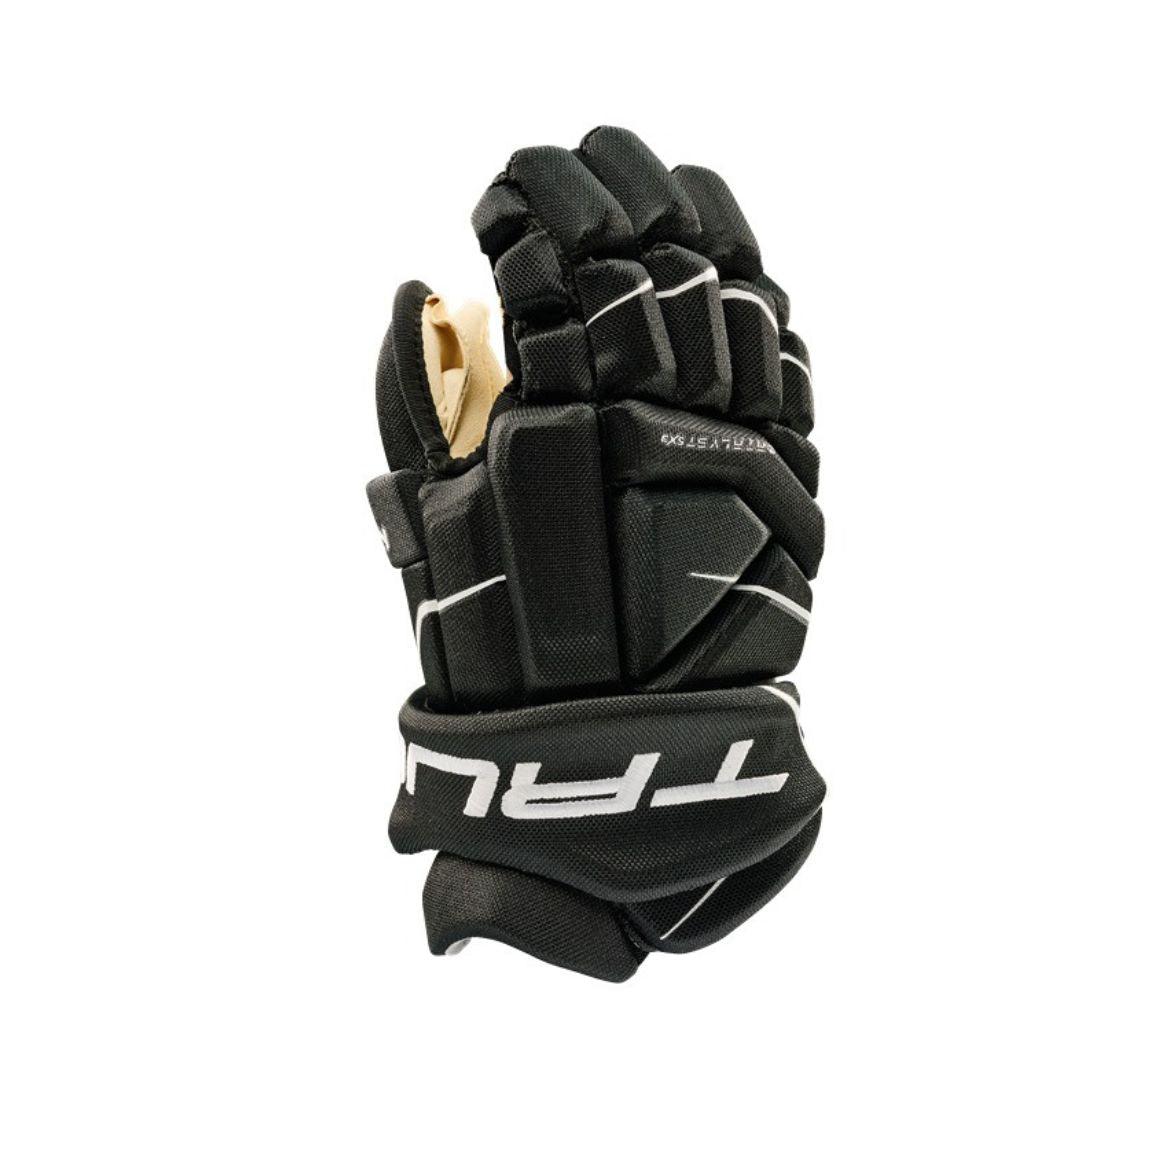 True Catalyst 5X3 Hockey Gloves - Junior - Sports Excellence